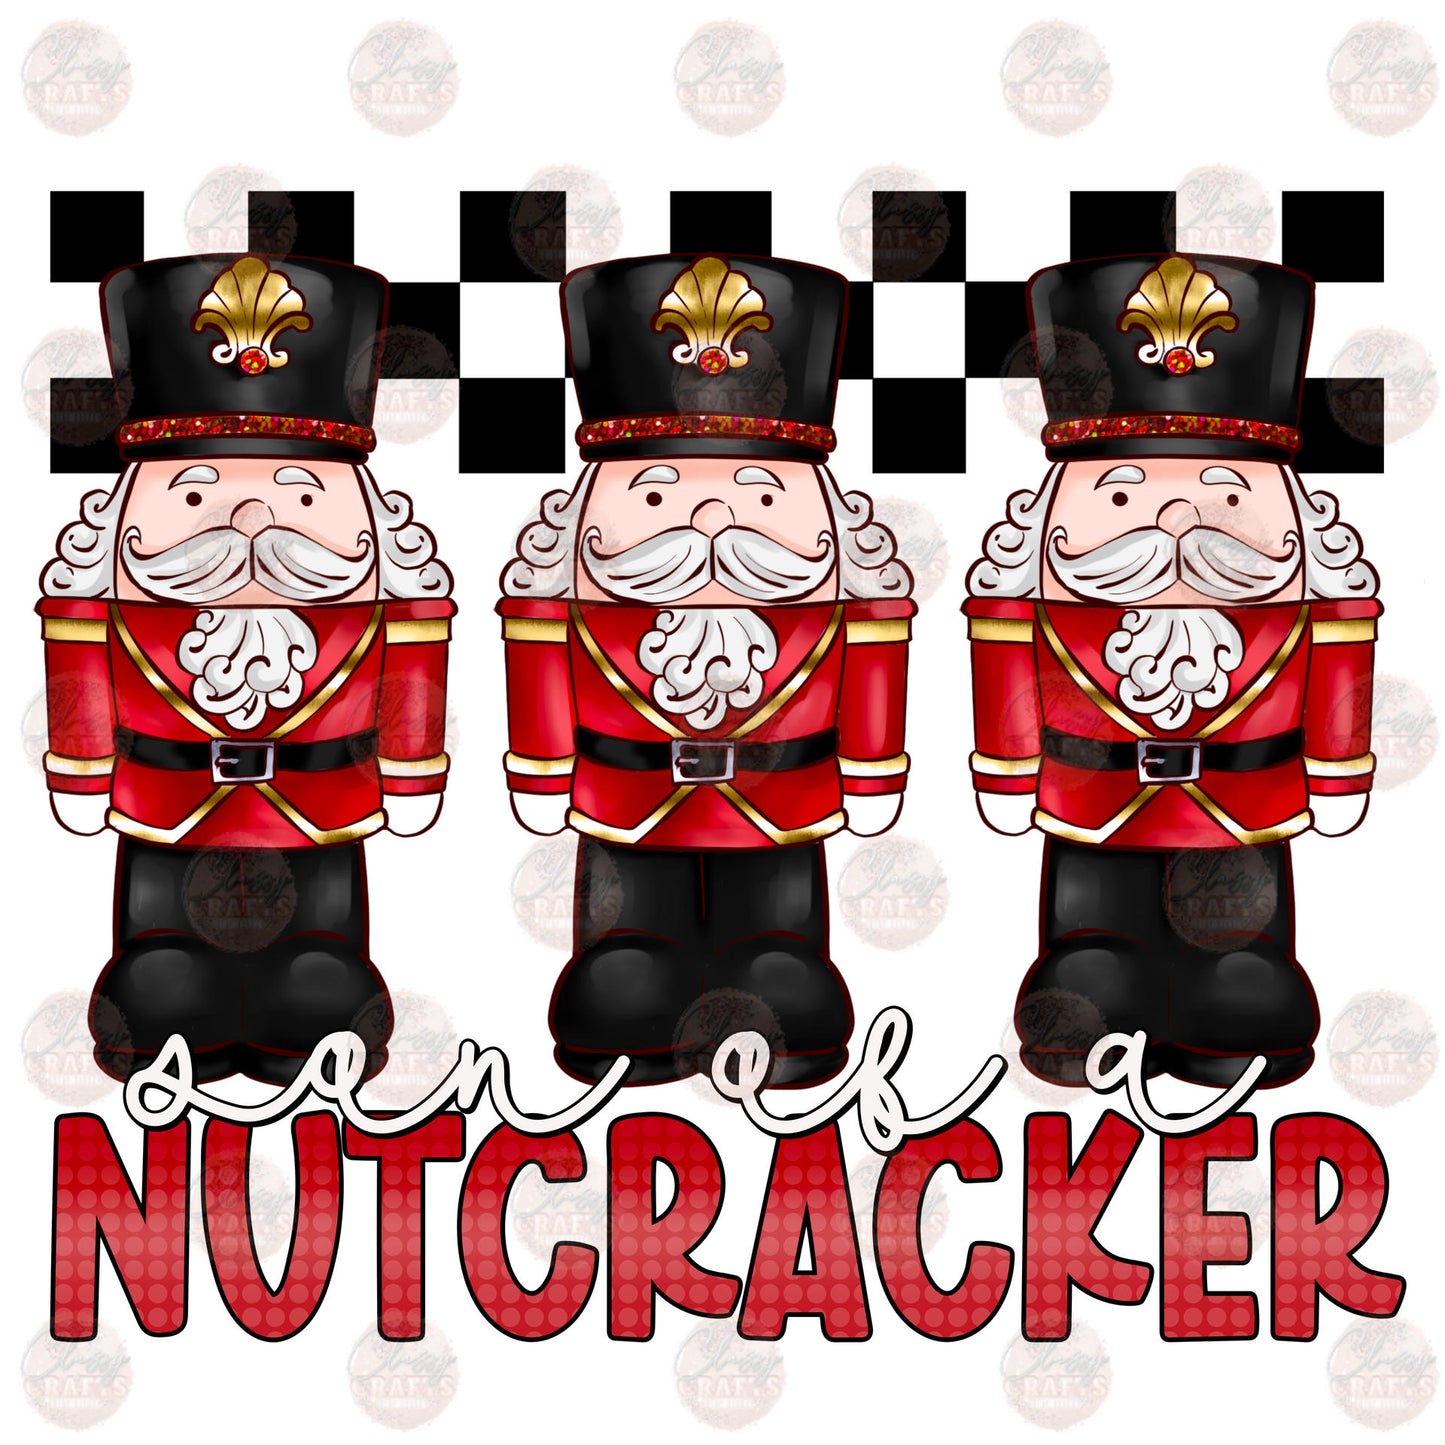 Son Of A Nutcracker - Sublimation Transfers